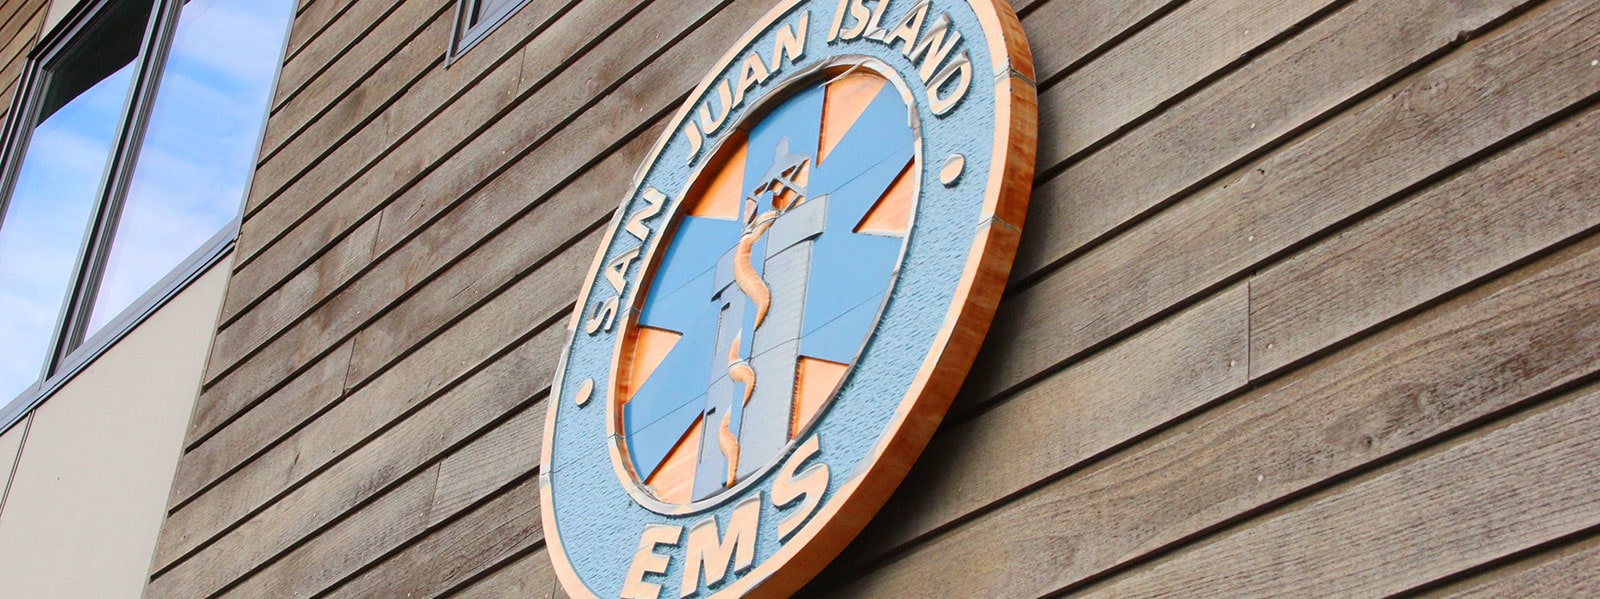 EMS Sign on Building